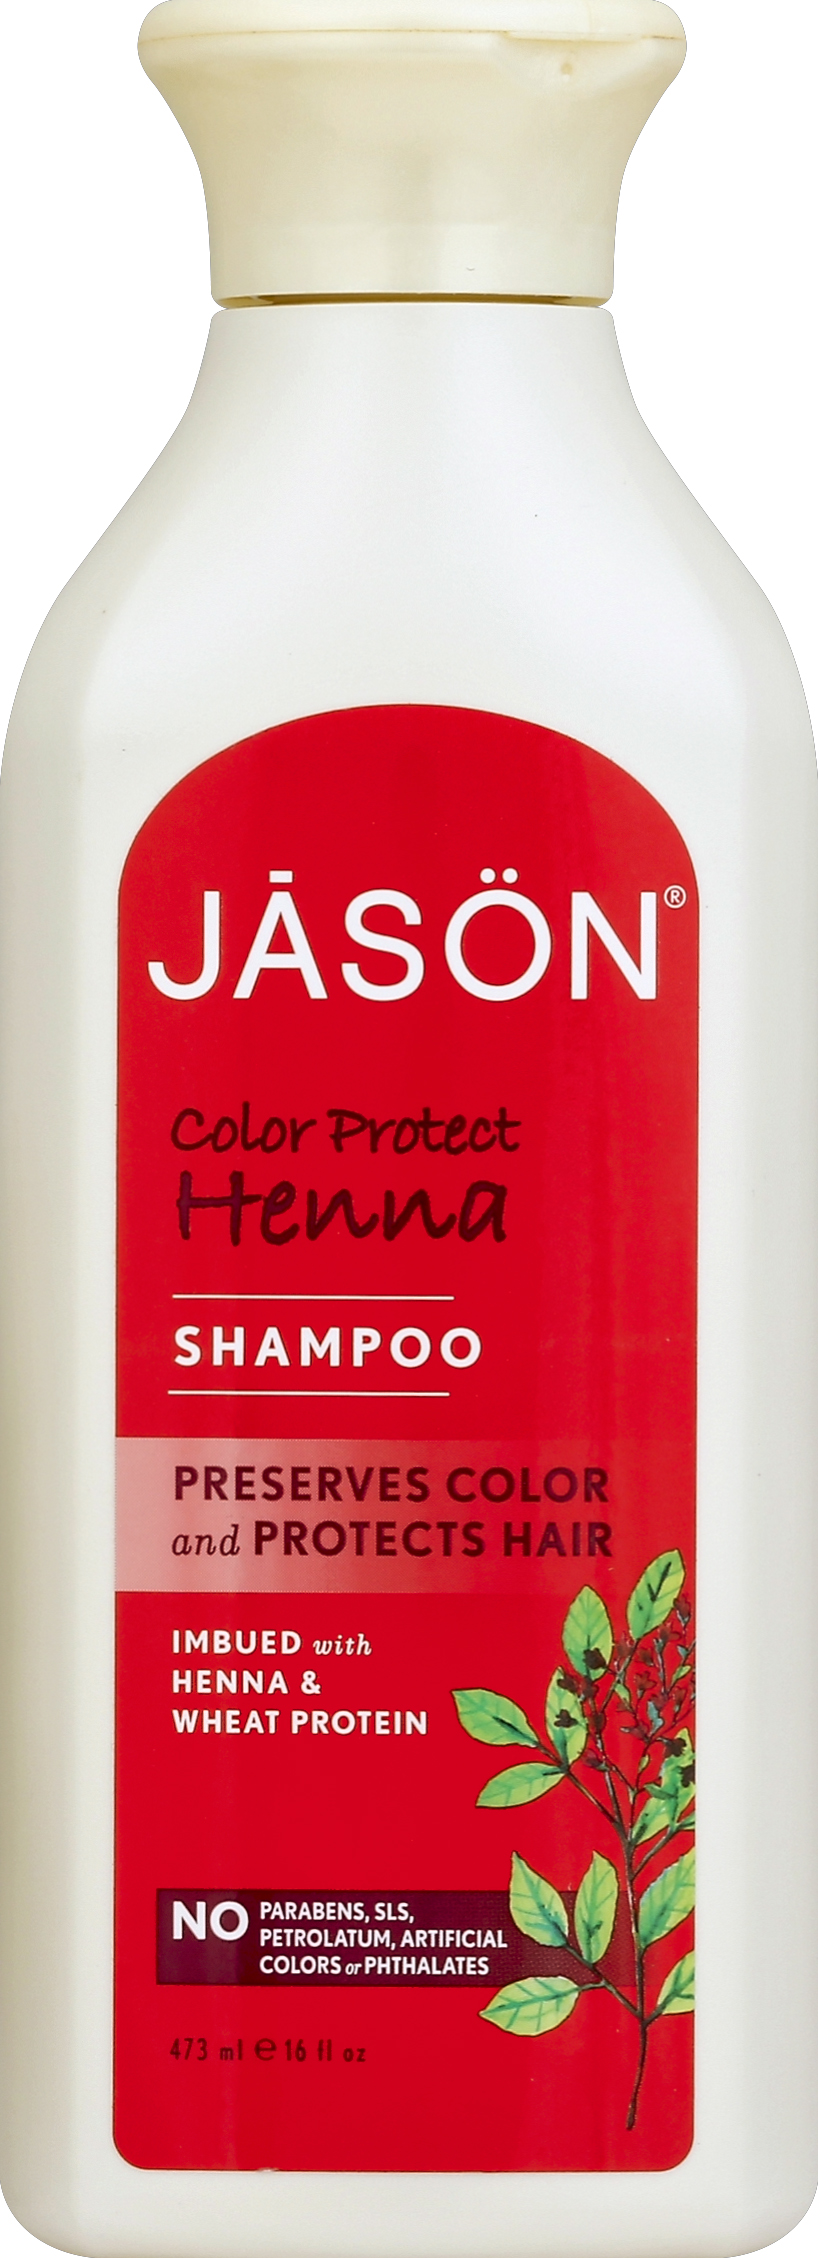 Jason Pure Natural Color Protect Henna Shampoo, 16 Oz - image 2 of 2